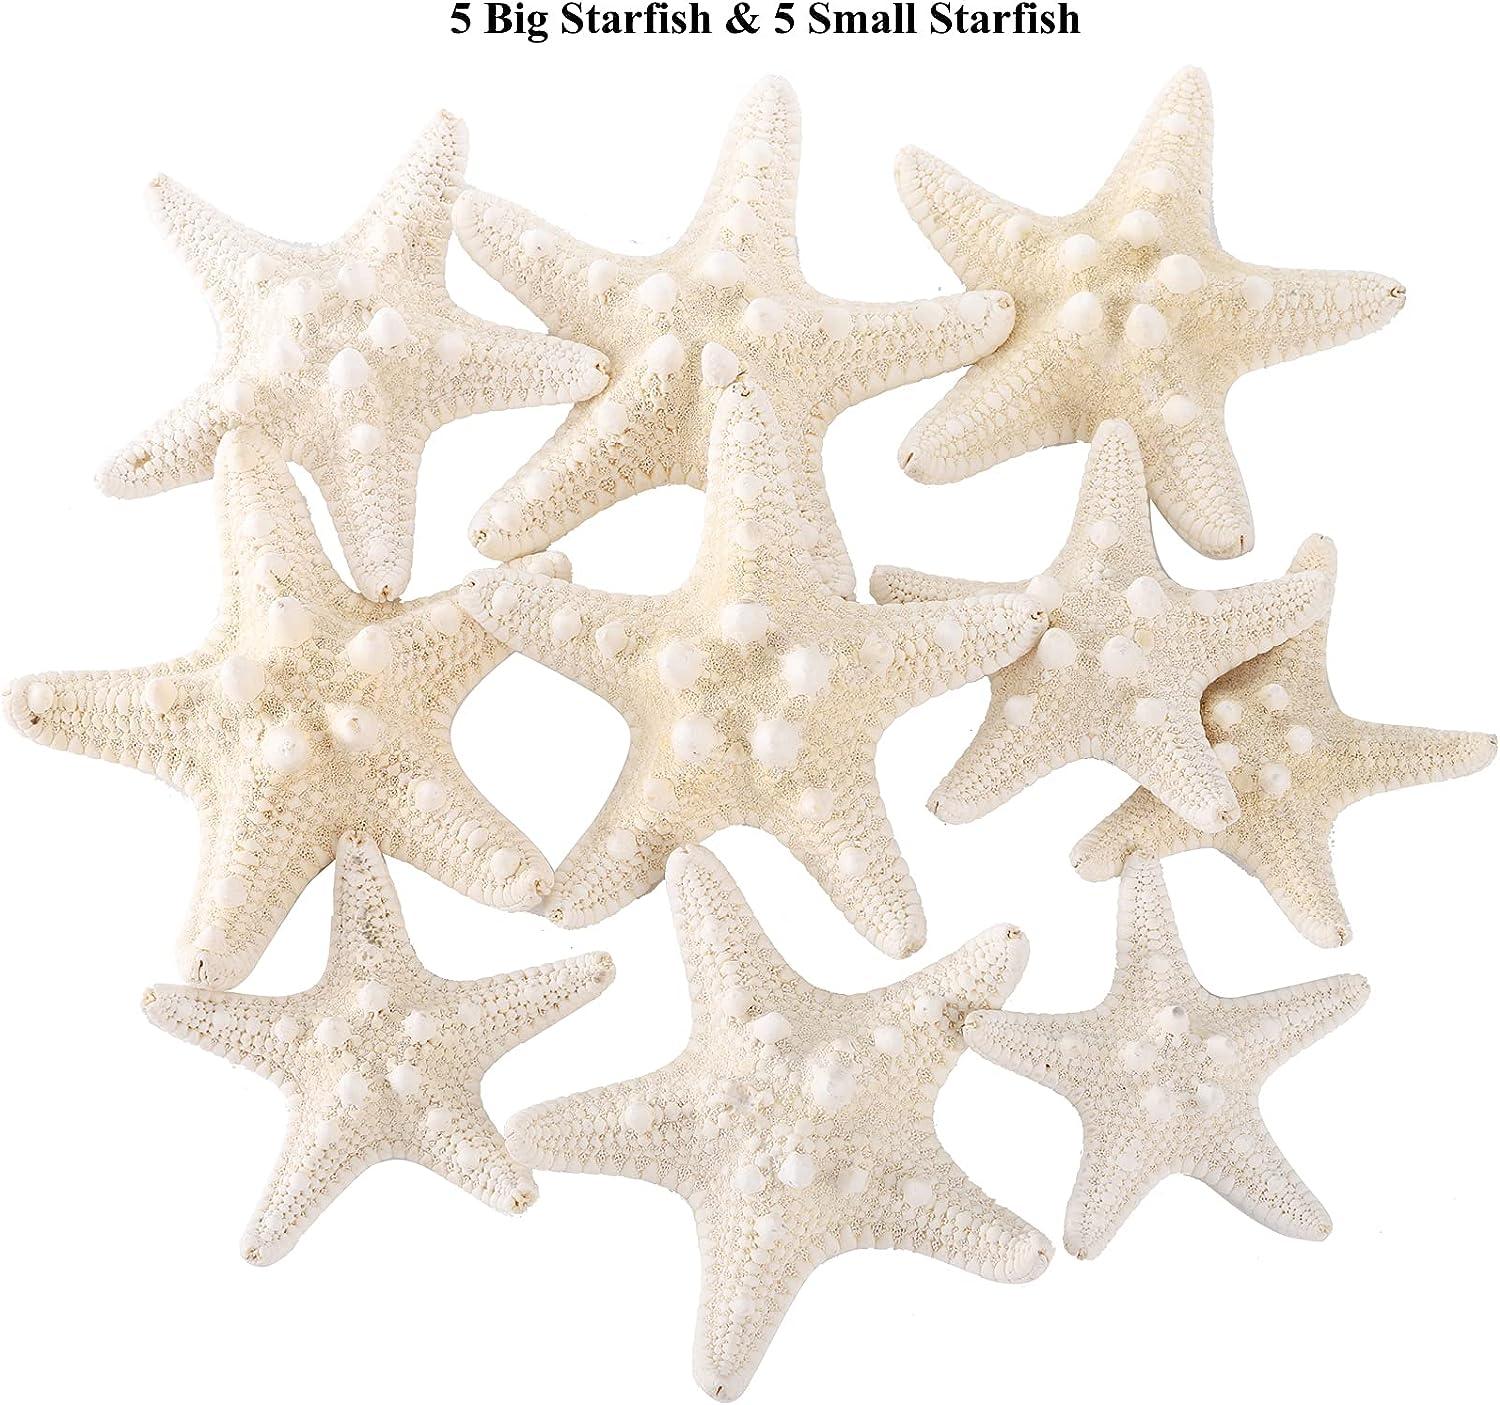  8 Pieces Sea Shells for Crafting Artificial Sea Shells Large  Multi-Styles Resin White Seashell Decor for Aquarium Scallop Starfish  Shells Ornaments White Shells for Fish Tank Home Decor : Home 